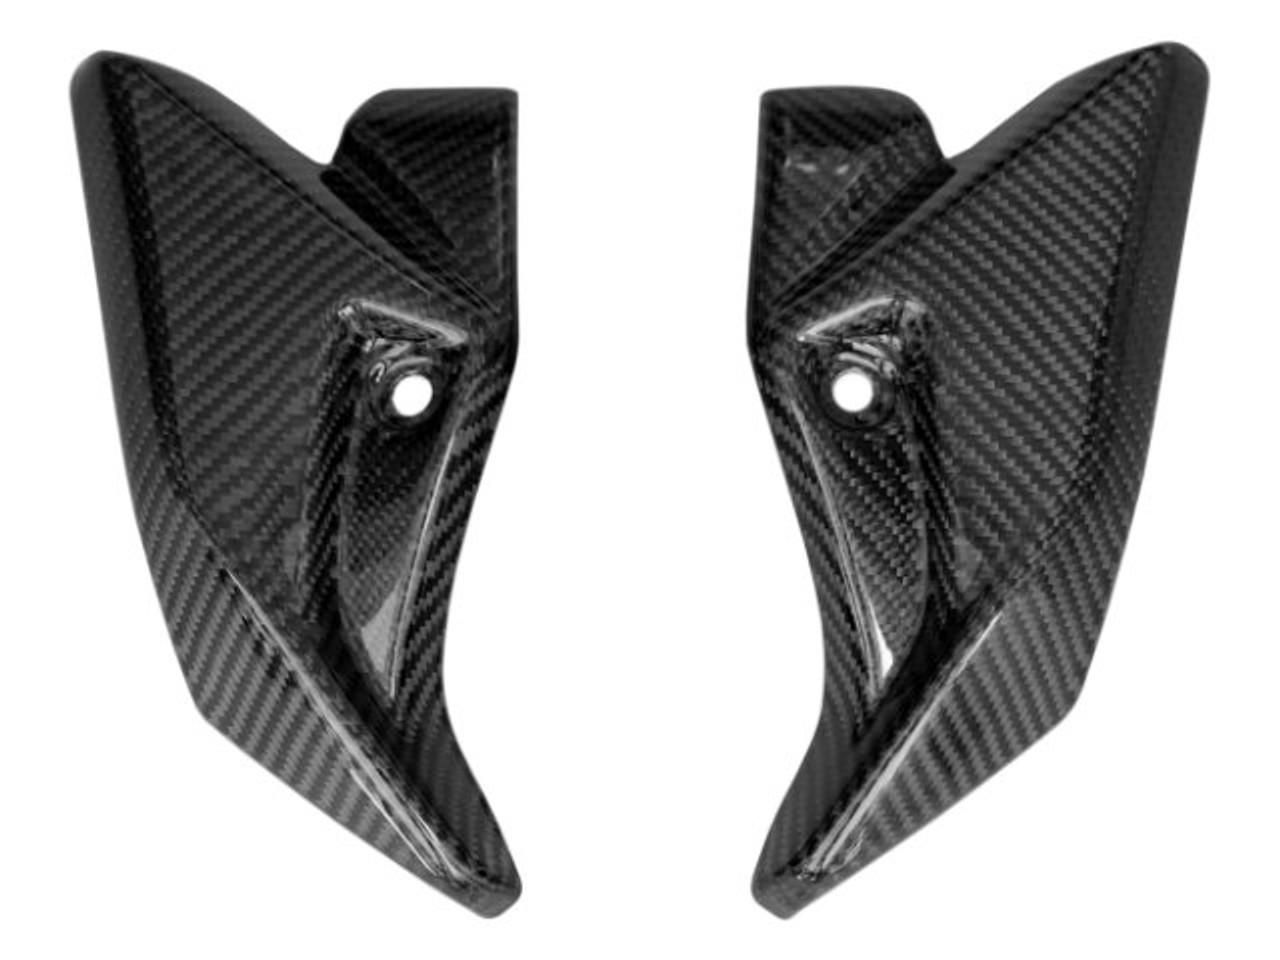 Headlight Covers in Glossy Twill Weave Carbon Fiber for Suzuki GSR600